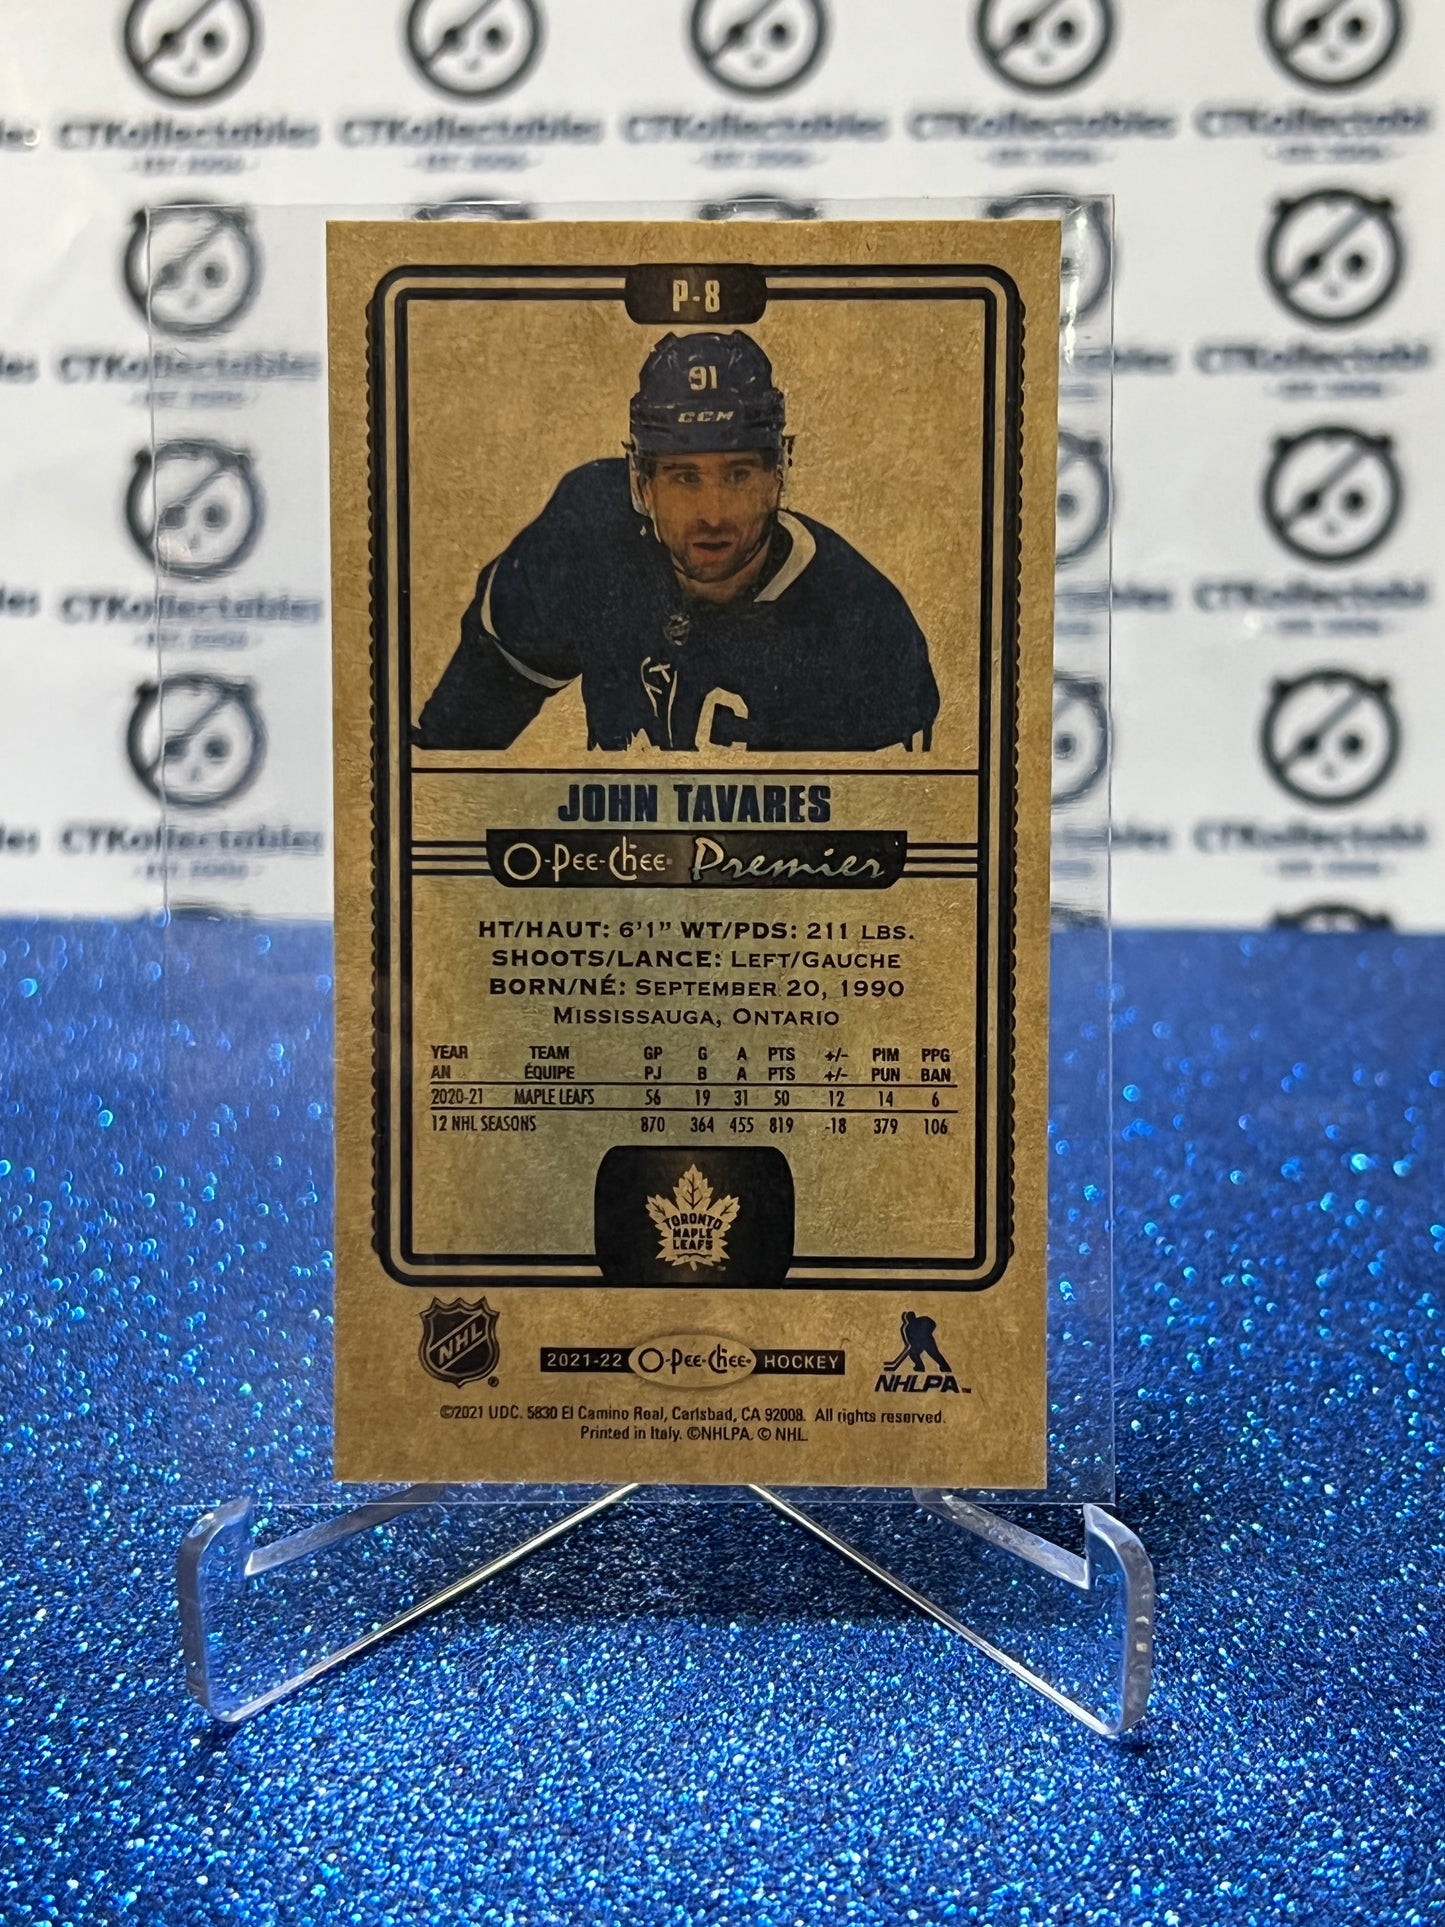 2021-22  O-PEE-CHEE PREMIER JOHN TAVARES # P-8 TALLBOYS TORONTO MAPLE LEAFS NHL HOCKEY TRADING CARD